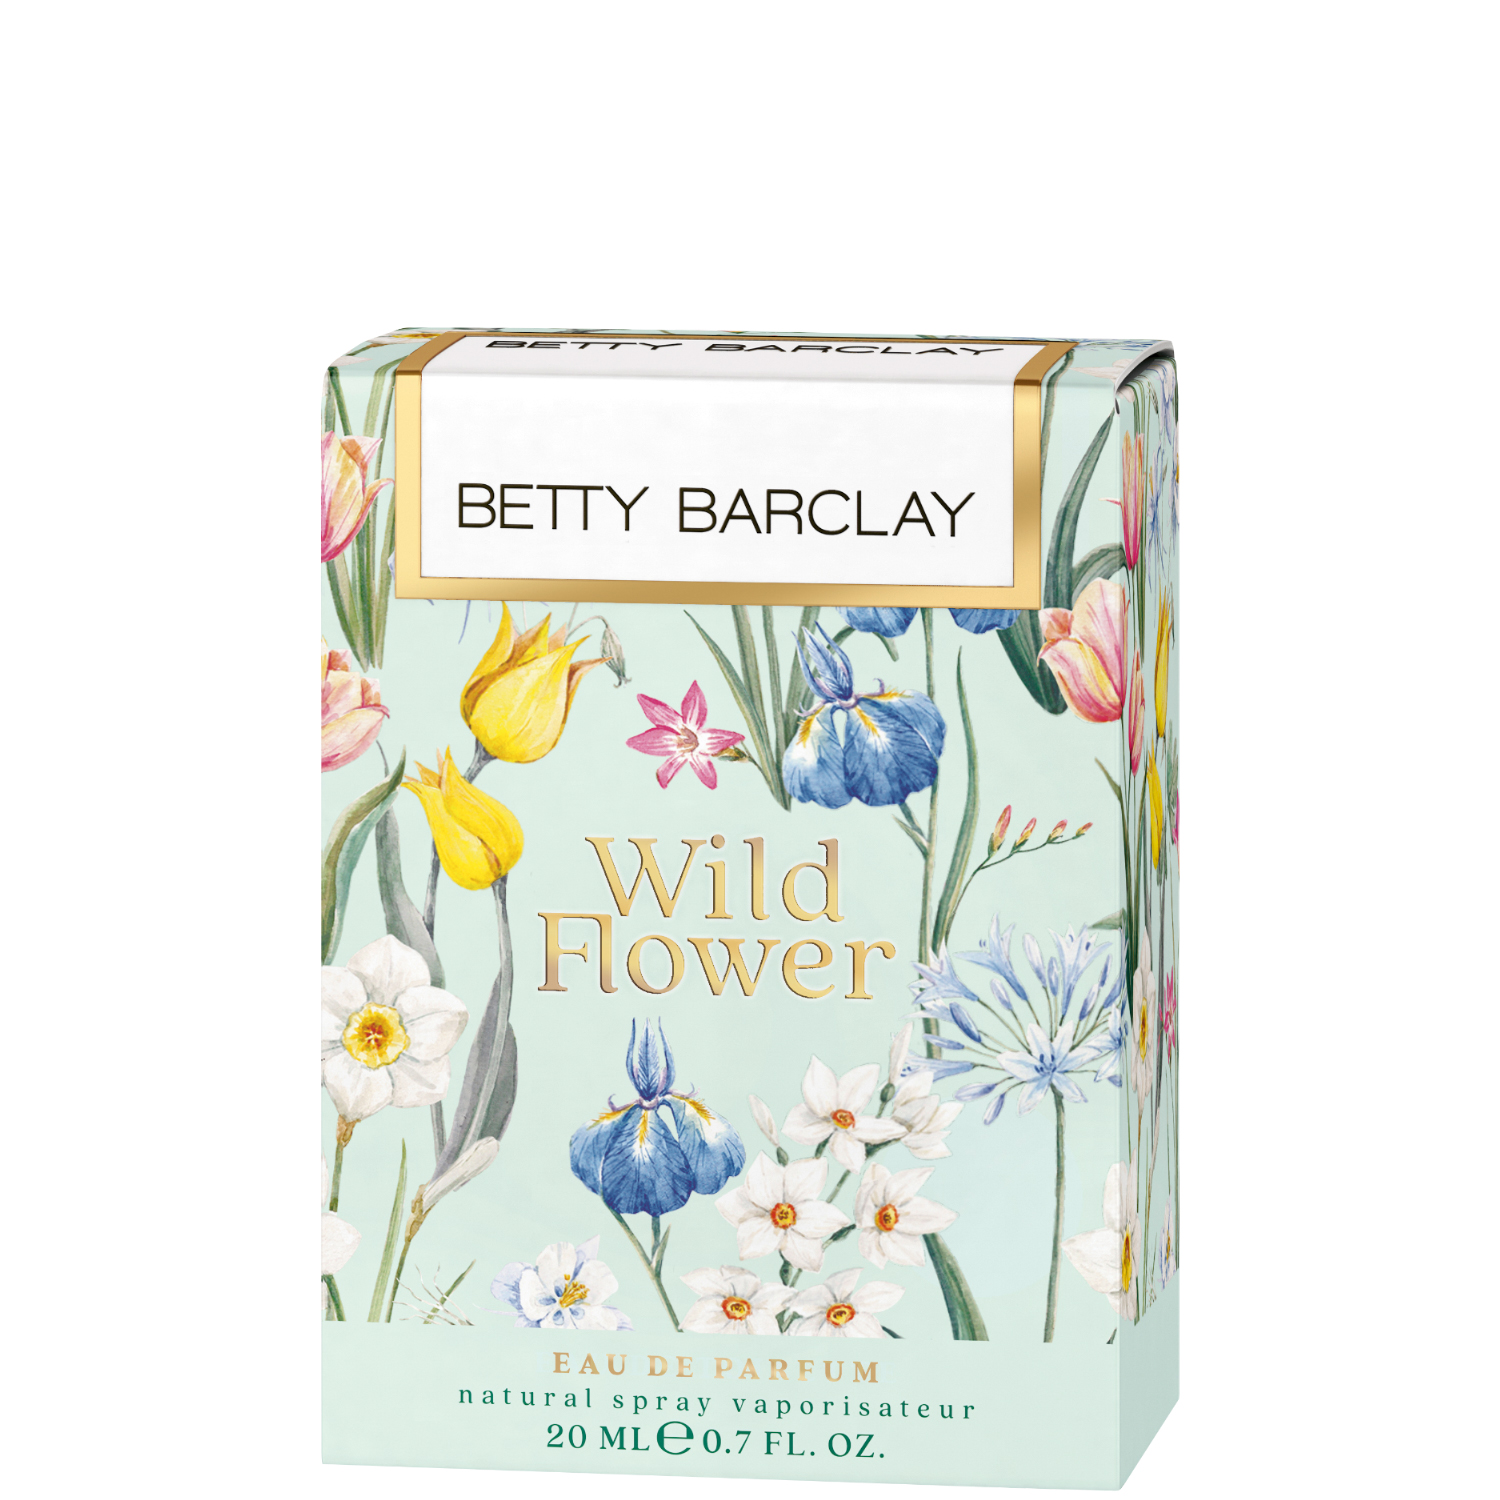 Betty Barclay Wild Flower Eau de Parfum 20ml